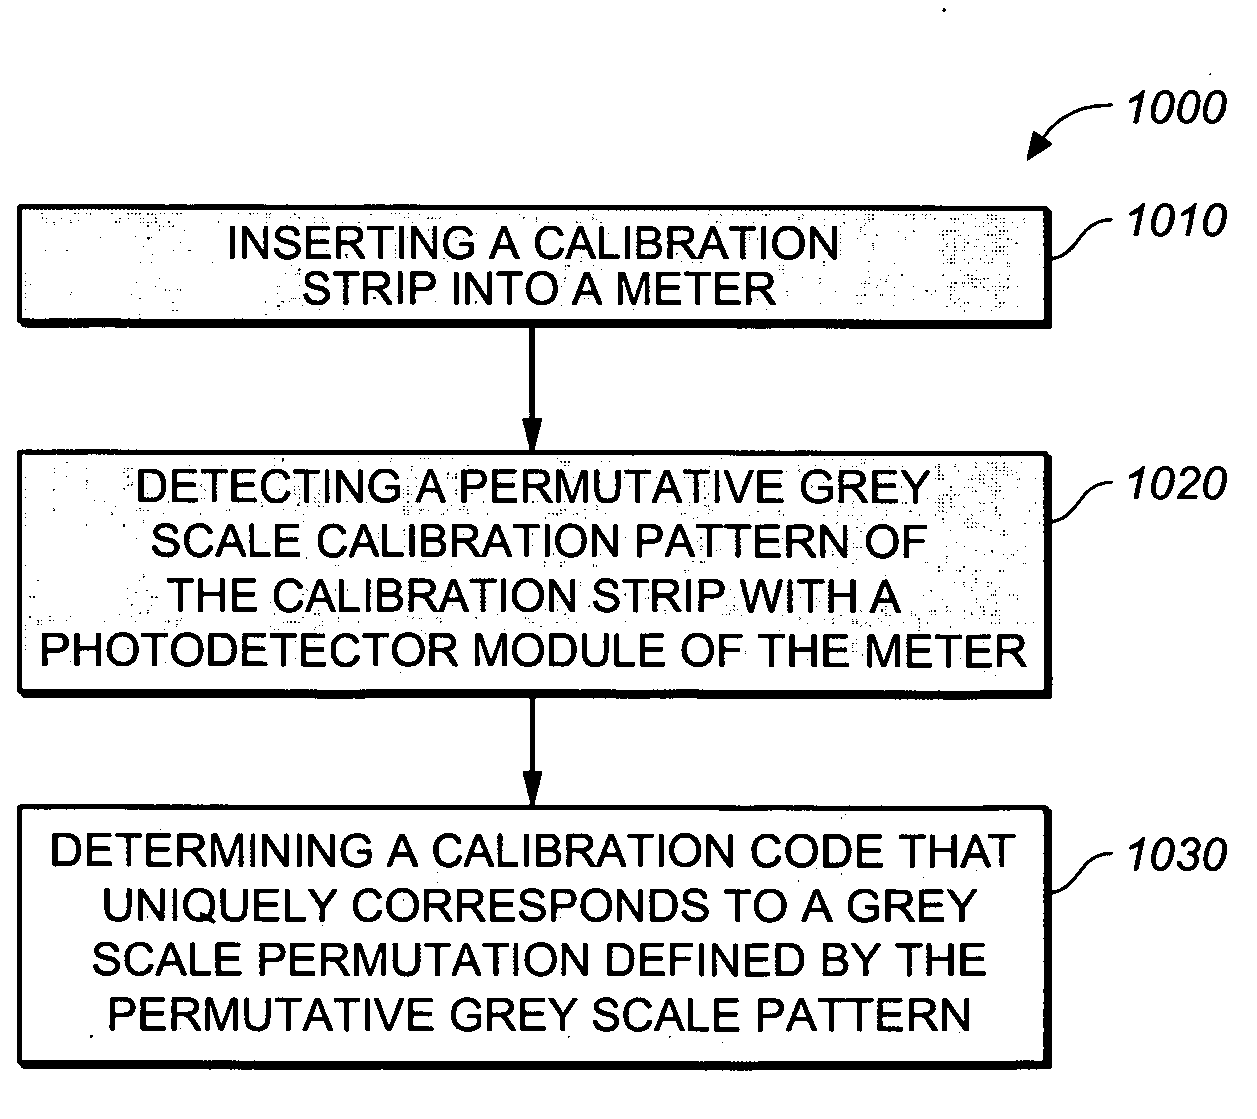 Test strip with permutative grey scale calibration pattern